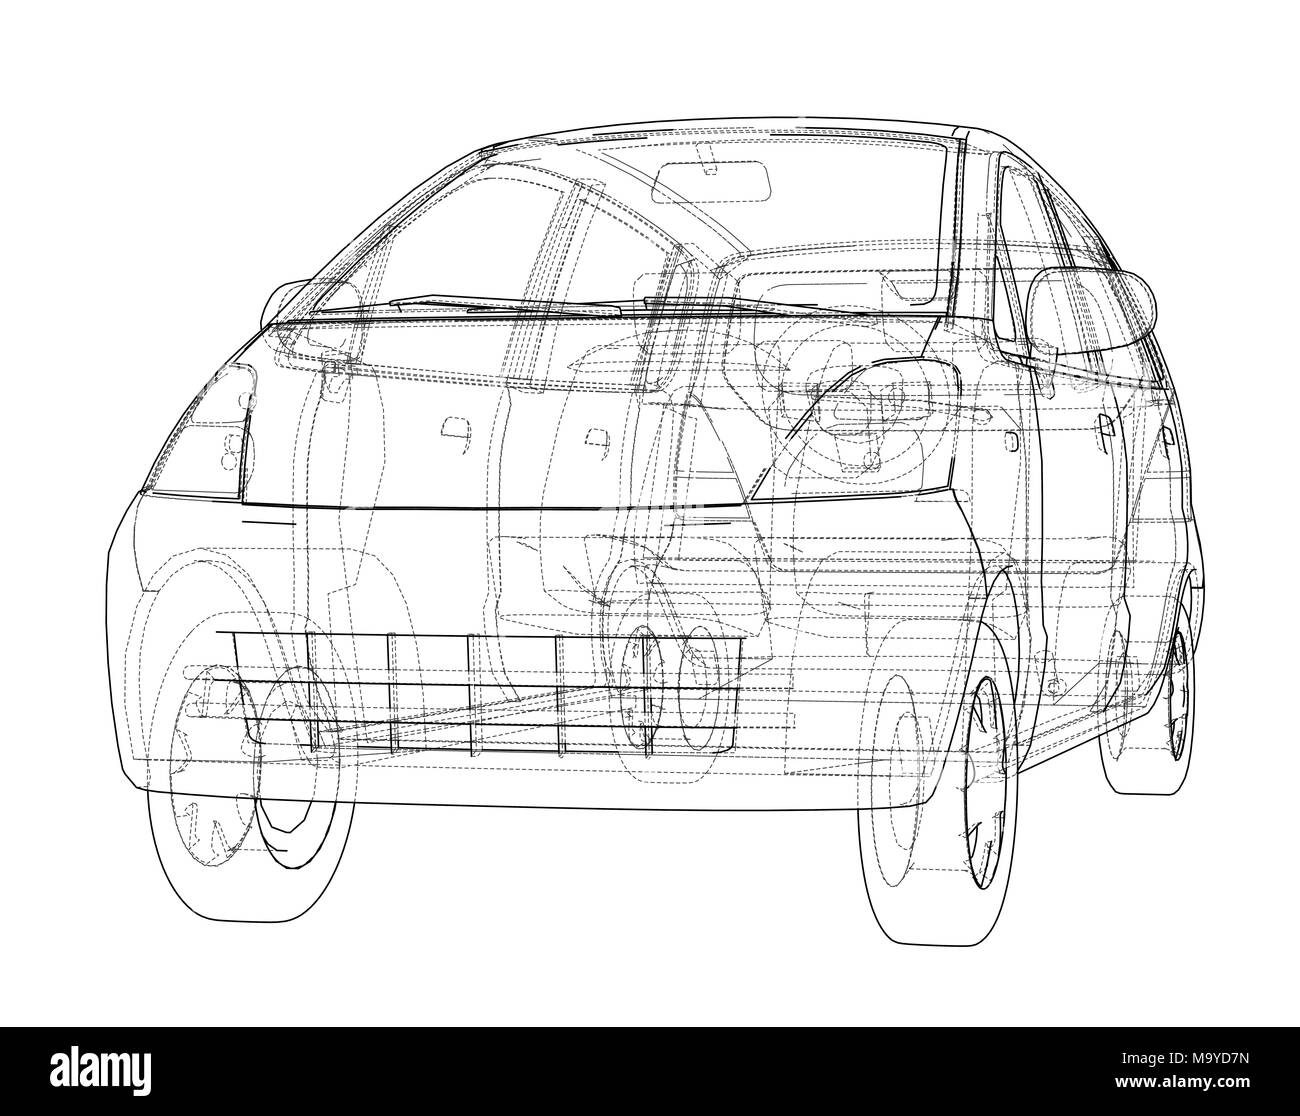 How to Draw a Car in 9 Easy Steps – Arteza.com